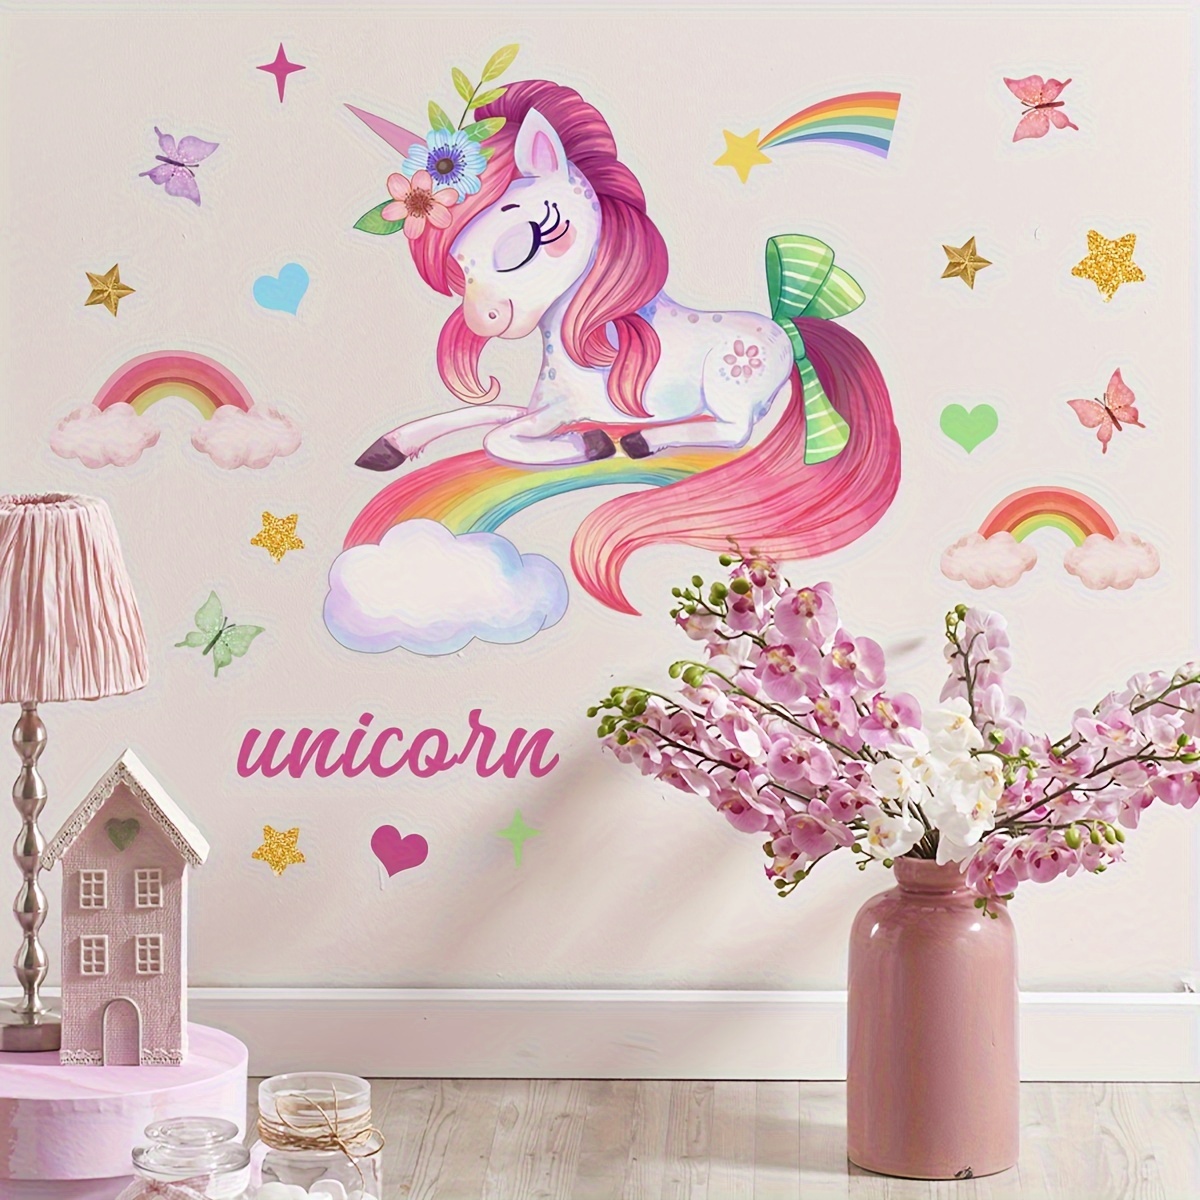  Adhesivo universal para pared, decoración mural de dibujos  animados de niña, calcomanías de pared de unicornio para casa, dormitorio  de niños, habitación de bebé, guardería, decoración de dibujos animados de  moda (